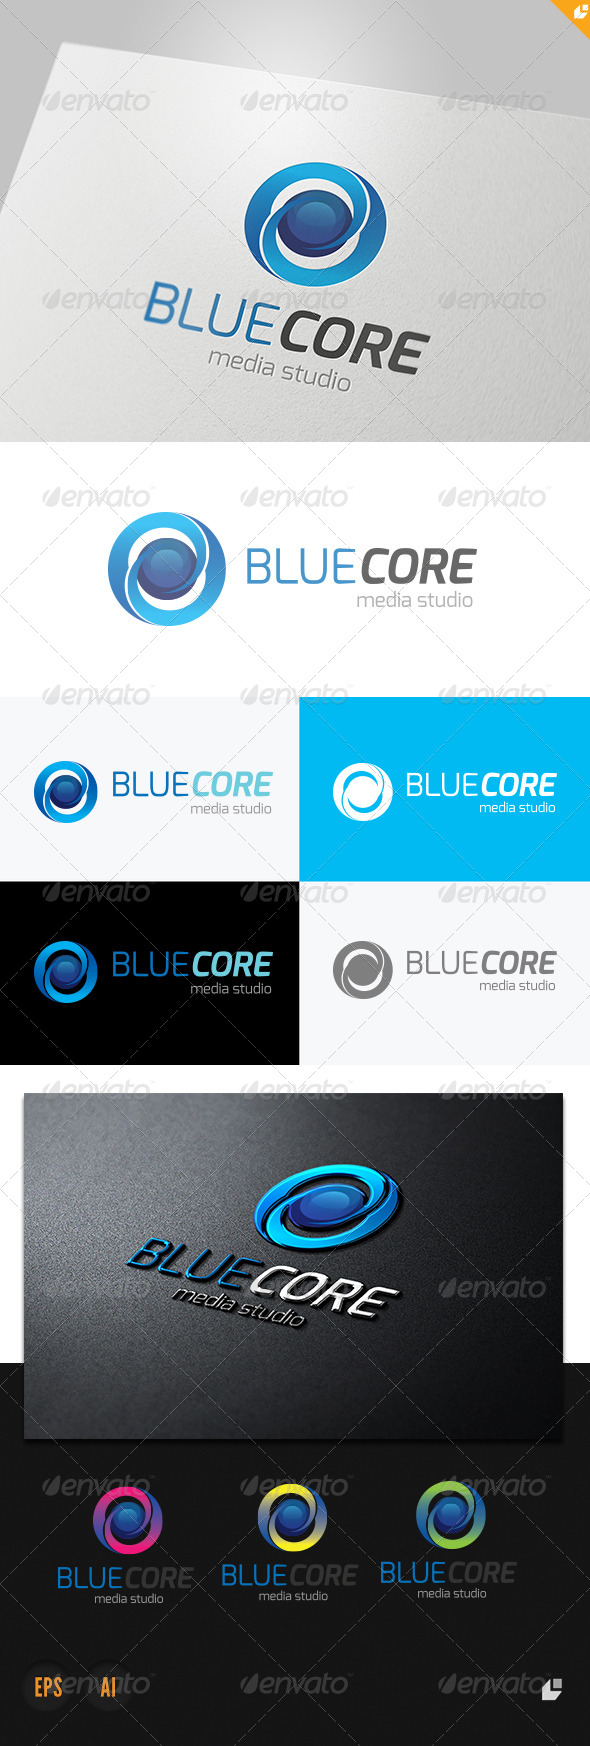 Blue Core Media Studio Logo